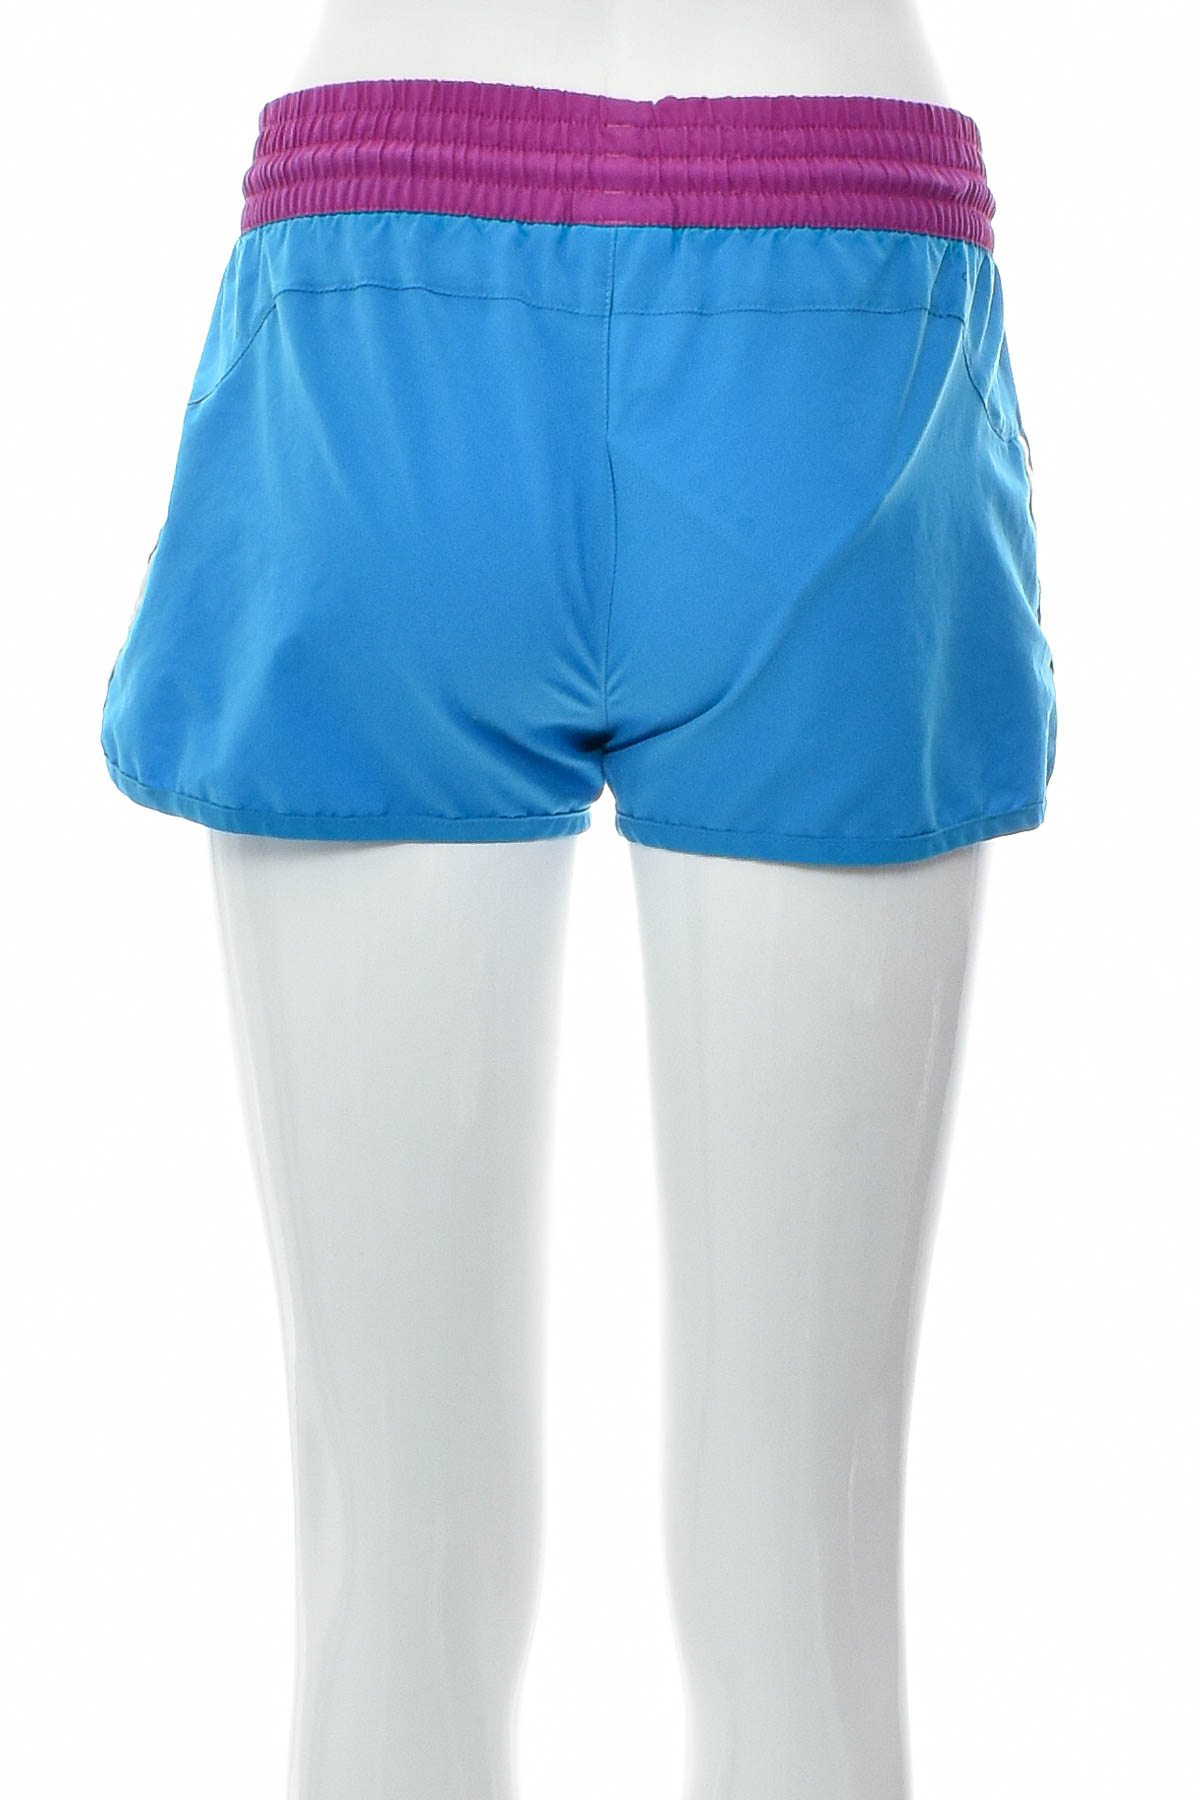 Women's shorts - Adidas - 1